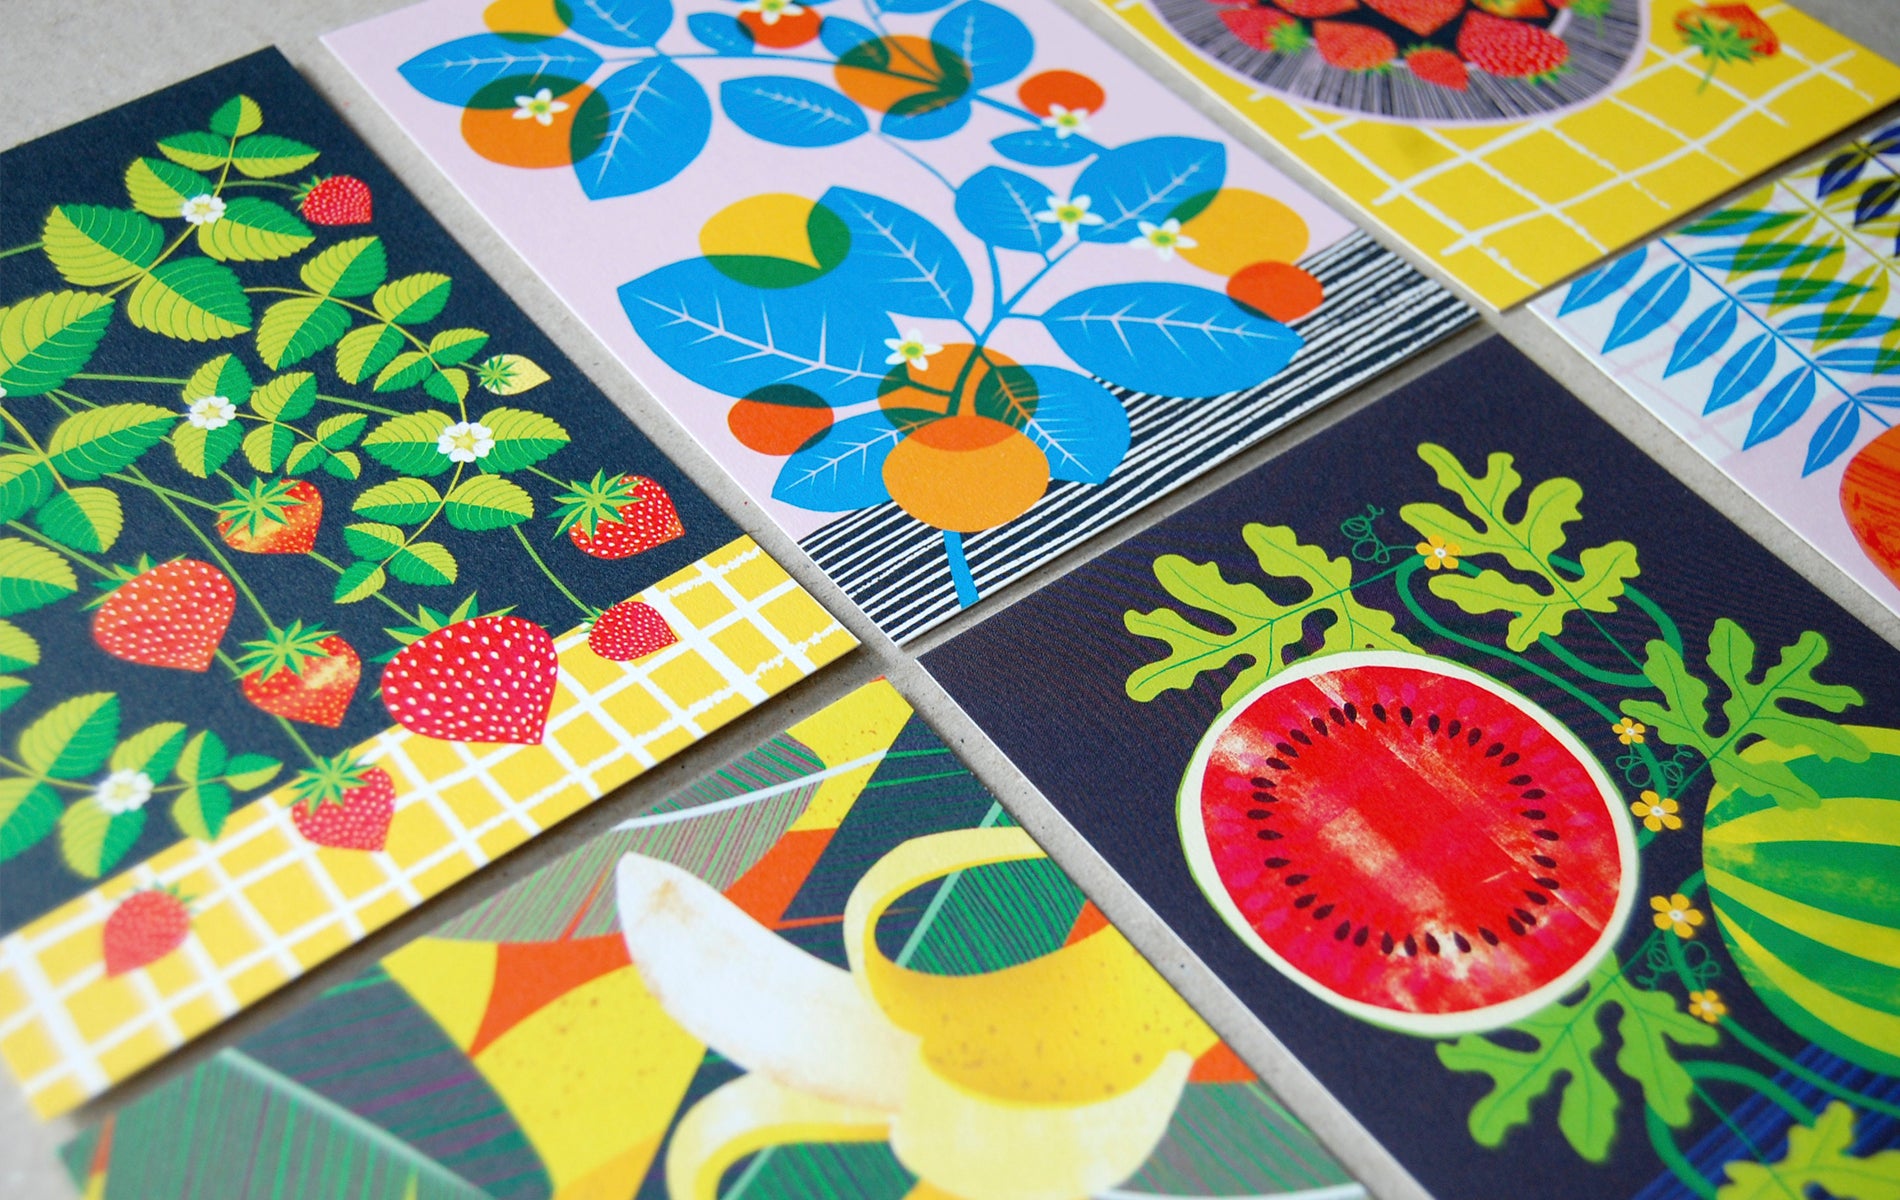 Fruit Salad A6 Postcard Pack by Printer Johnson - ad&i